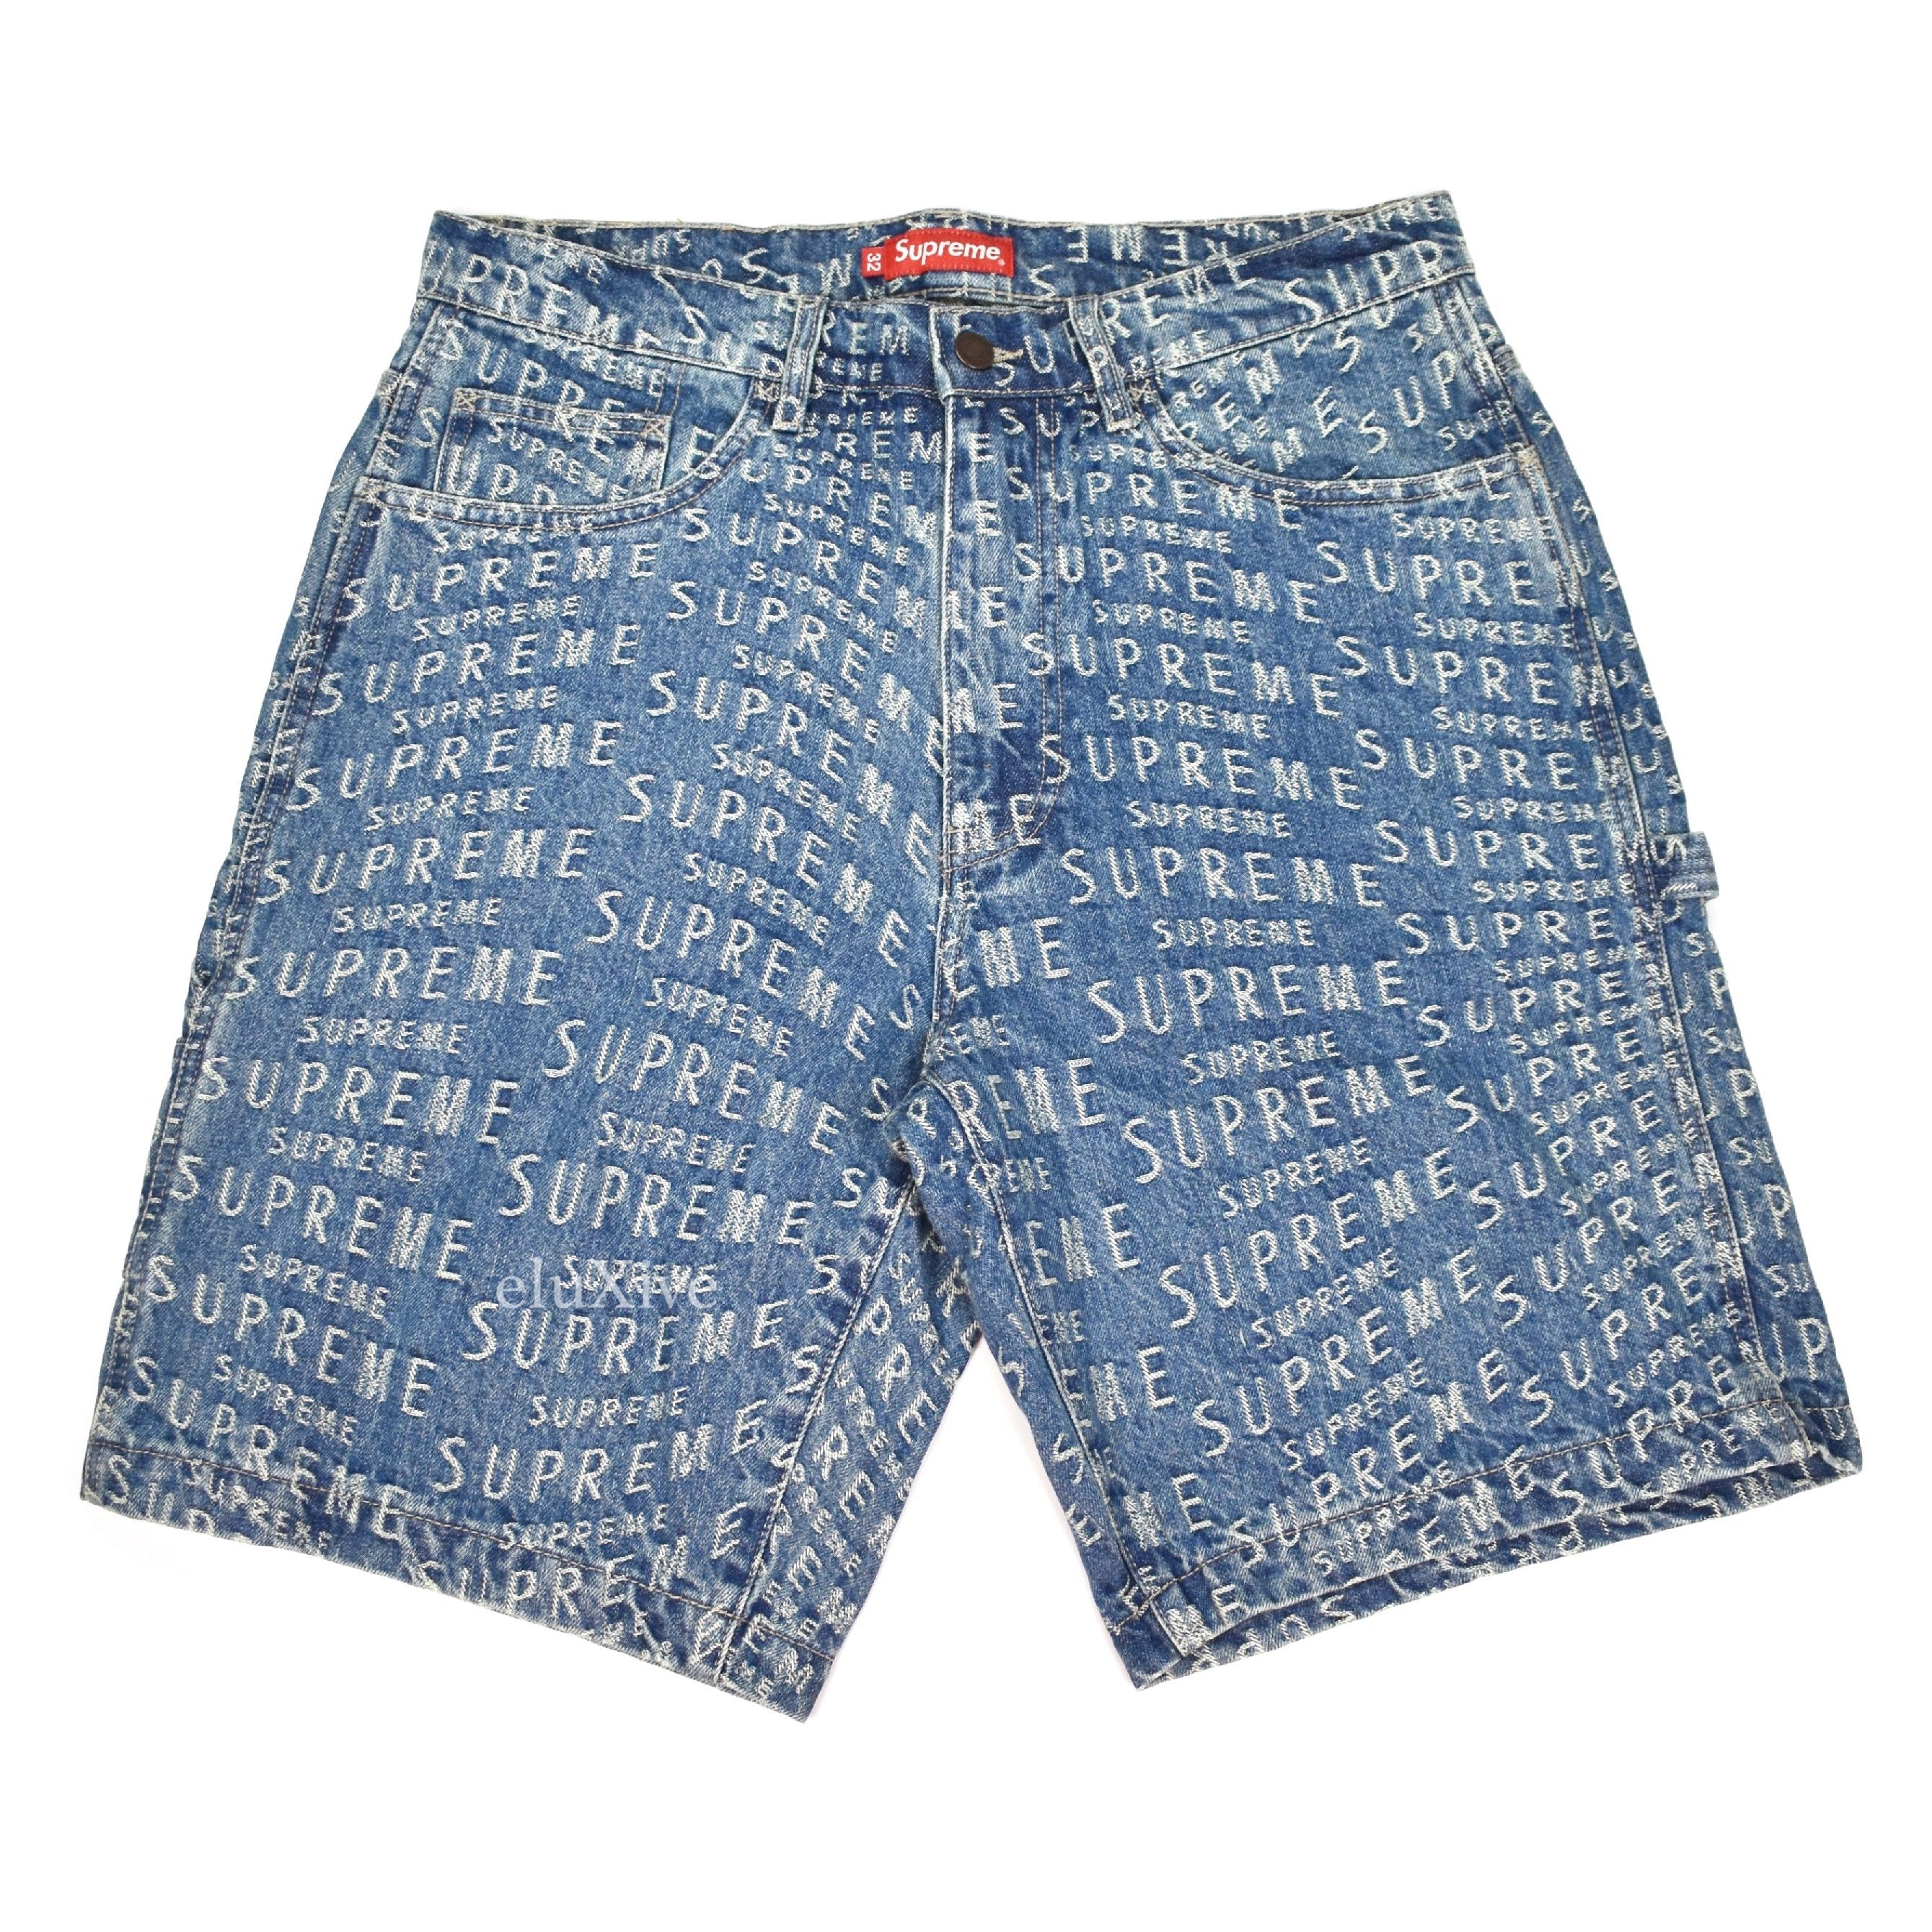 Supreme denim shorts for Sale in San Diego, CA - OfferUp